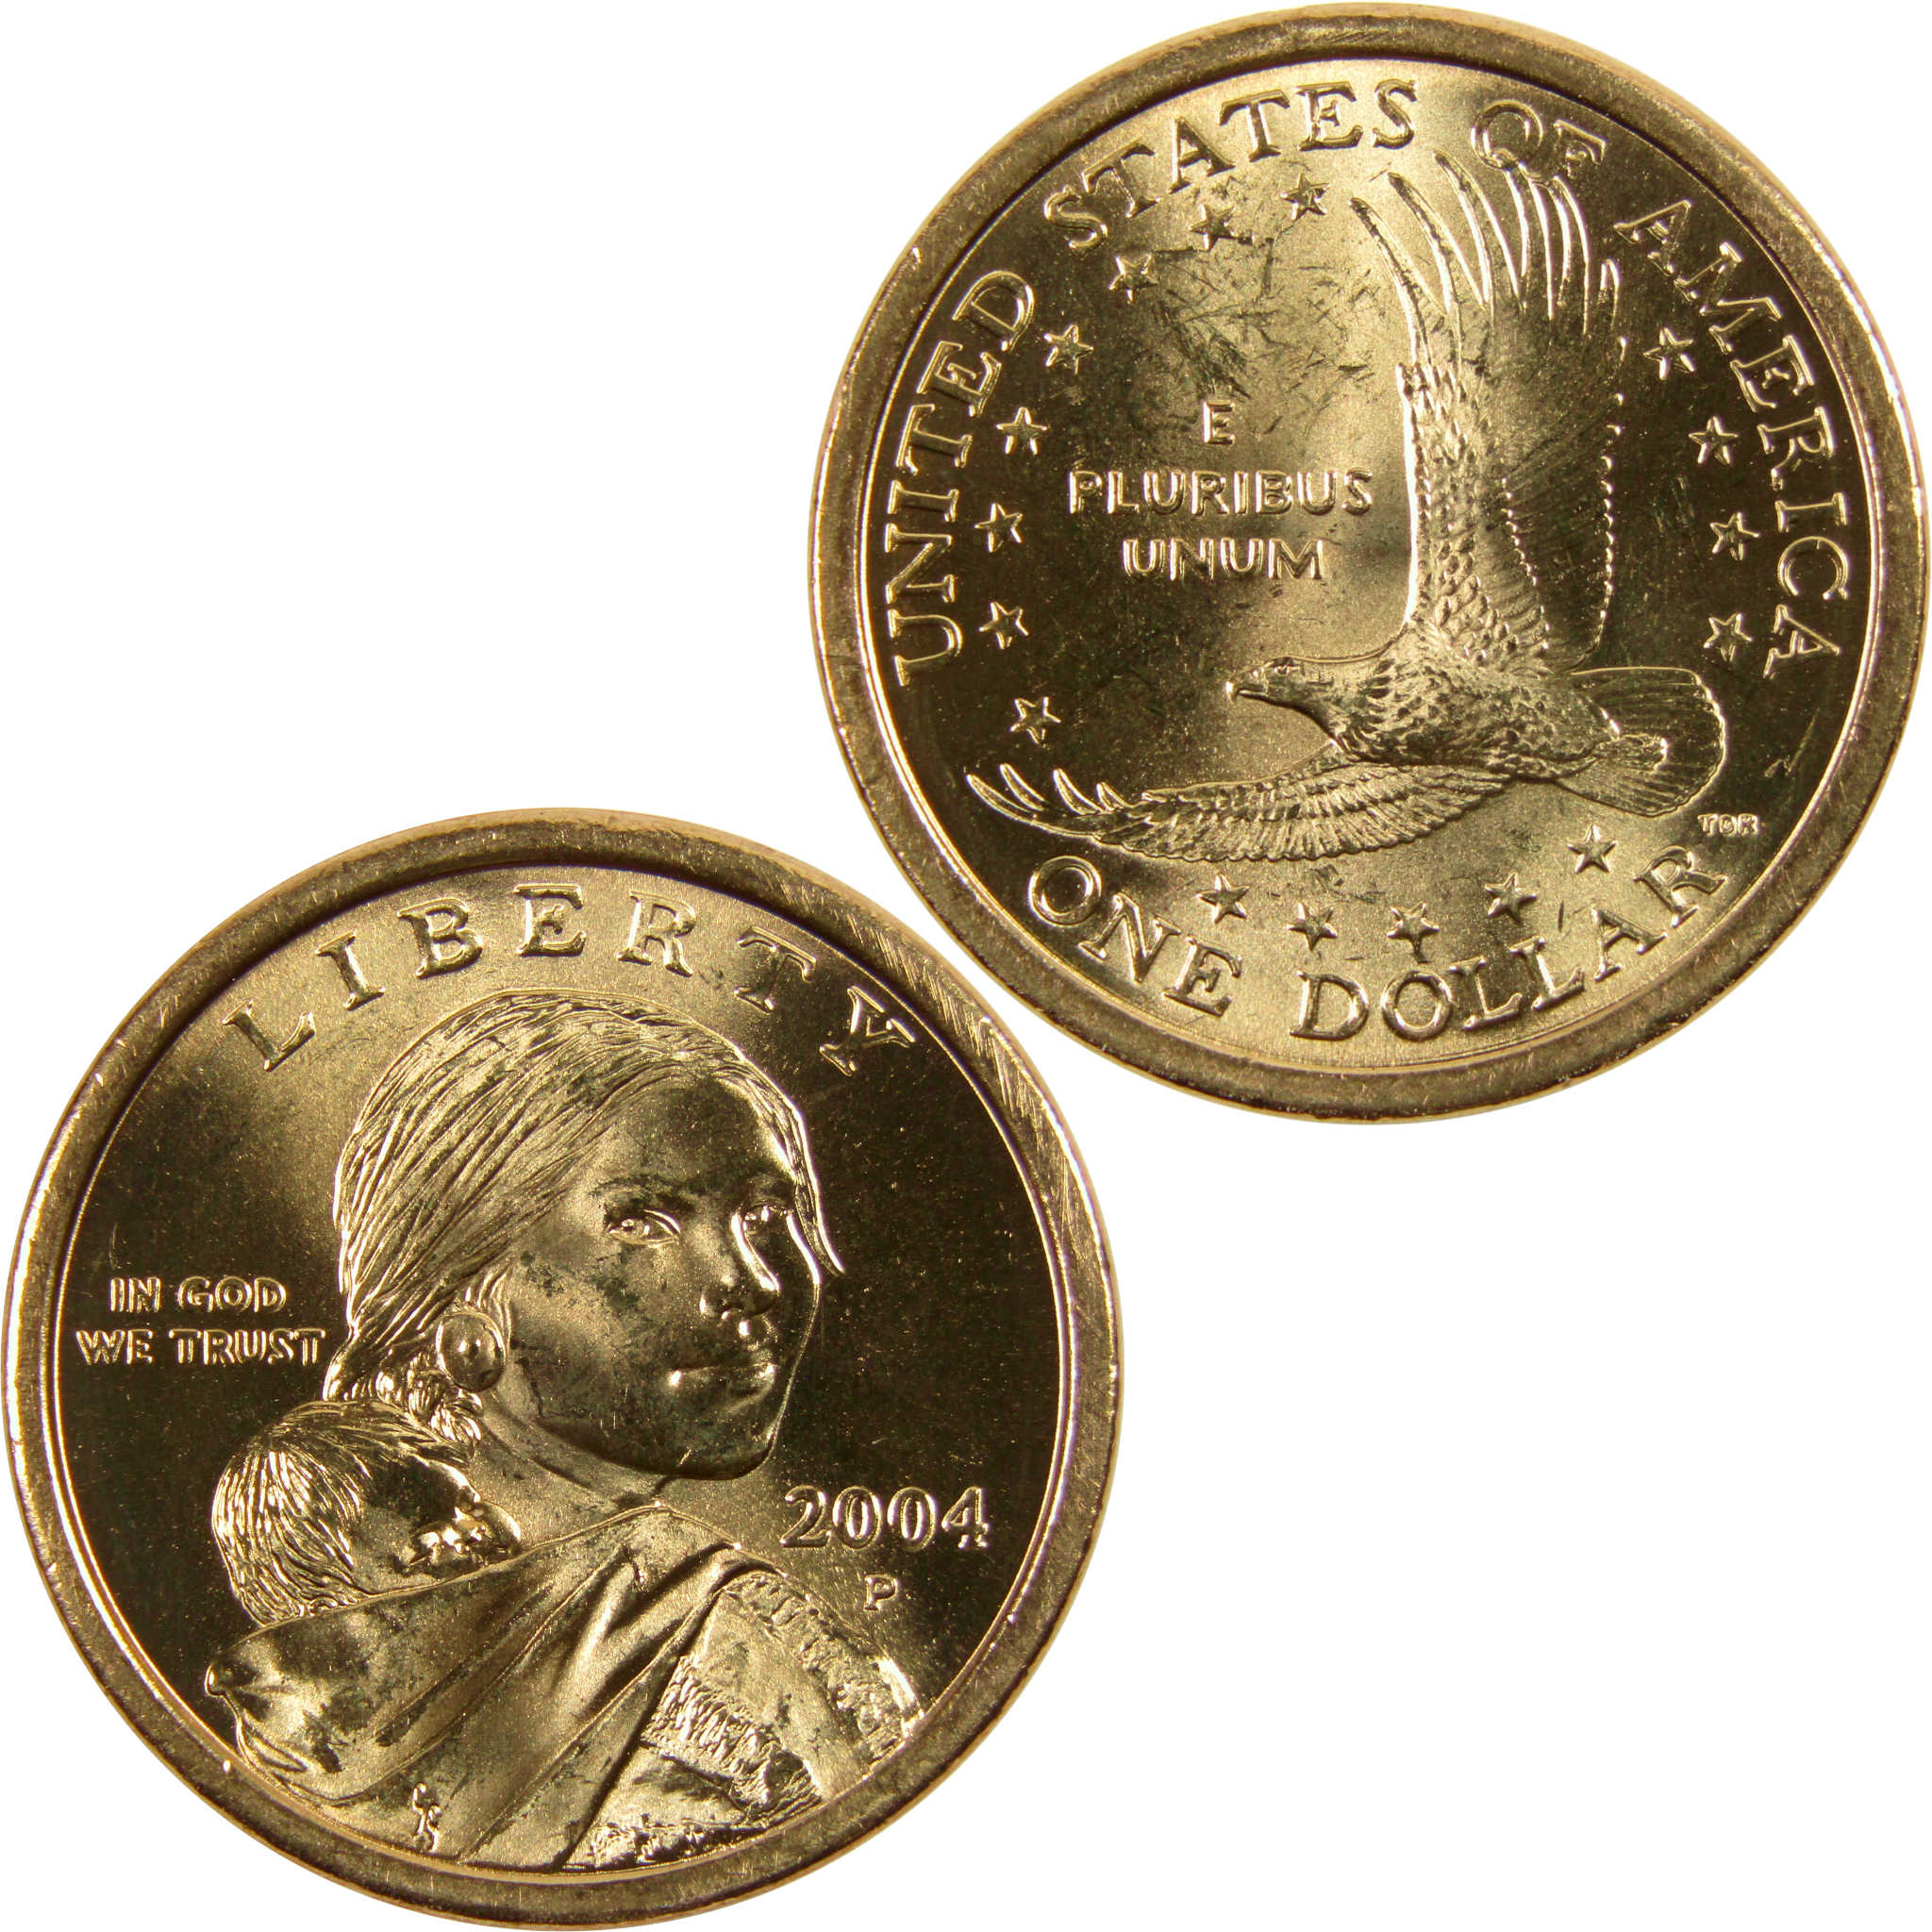 2004 P Sacagawea Native American Dollar BU Uncirculated $1 Coin